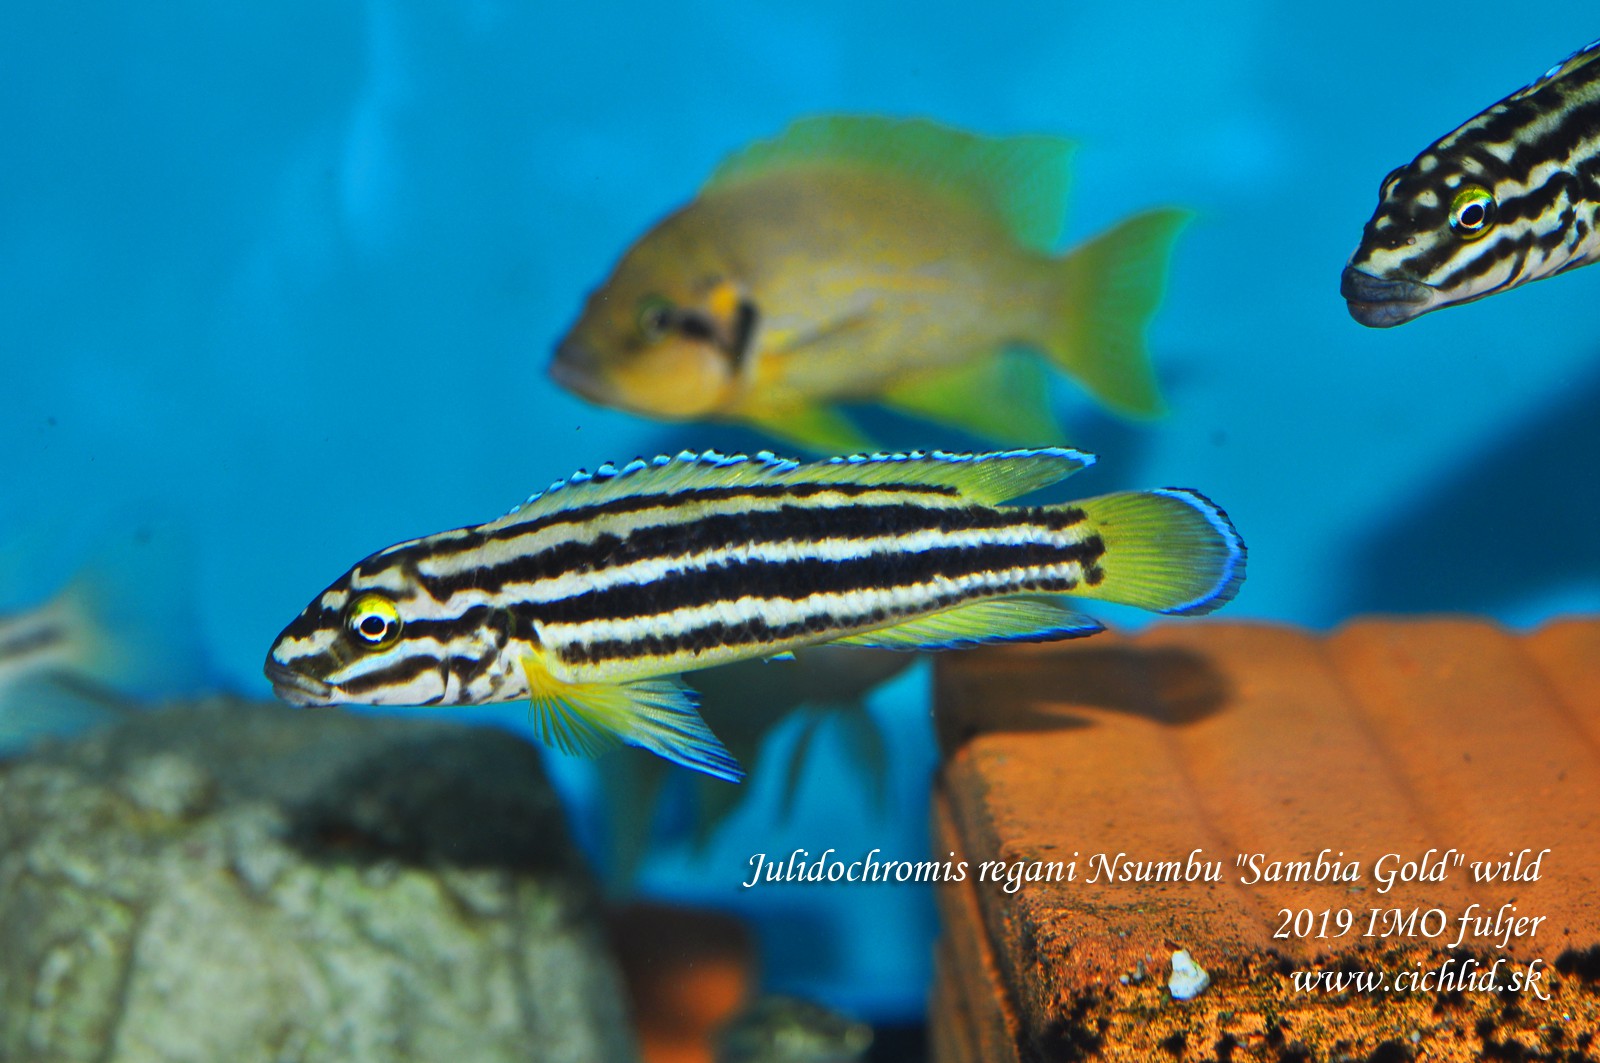 julidochromis regani nsumbu sambia gold